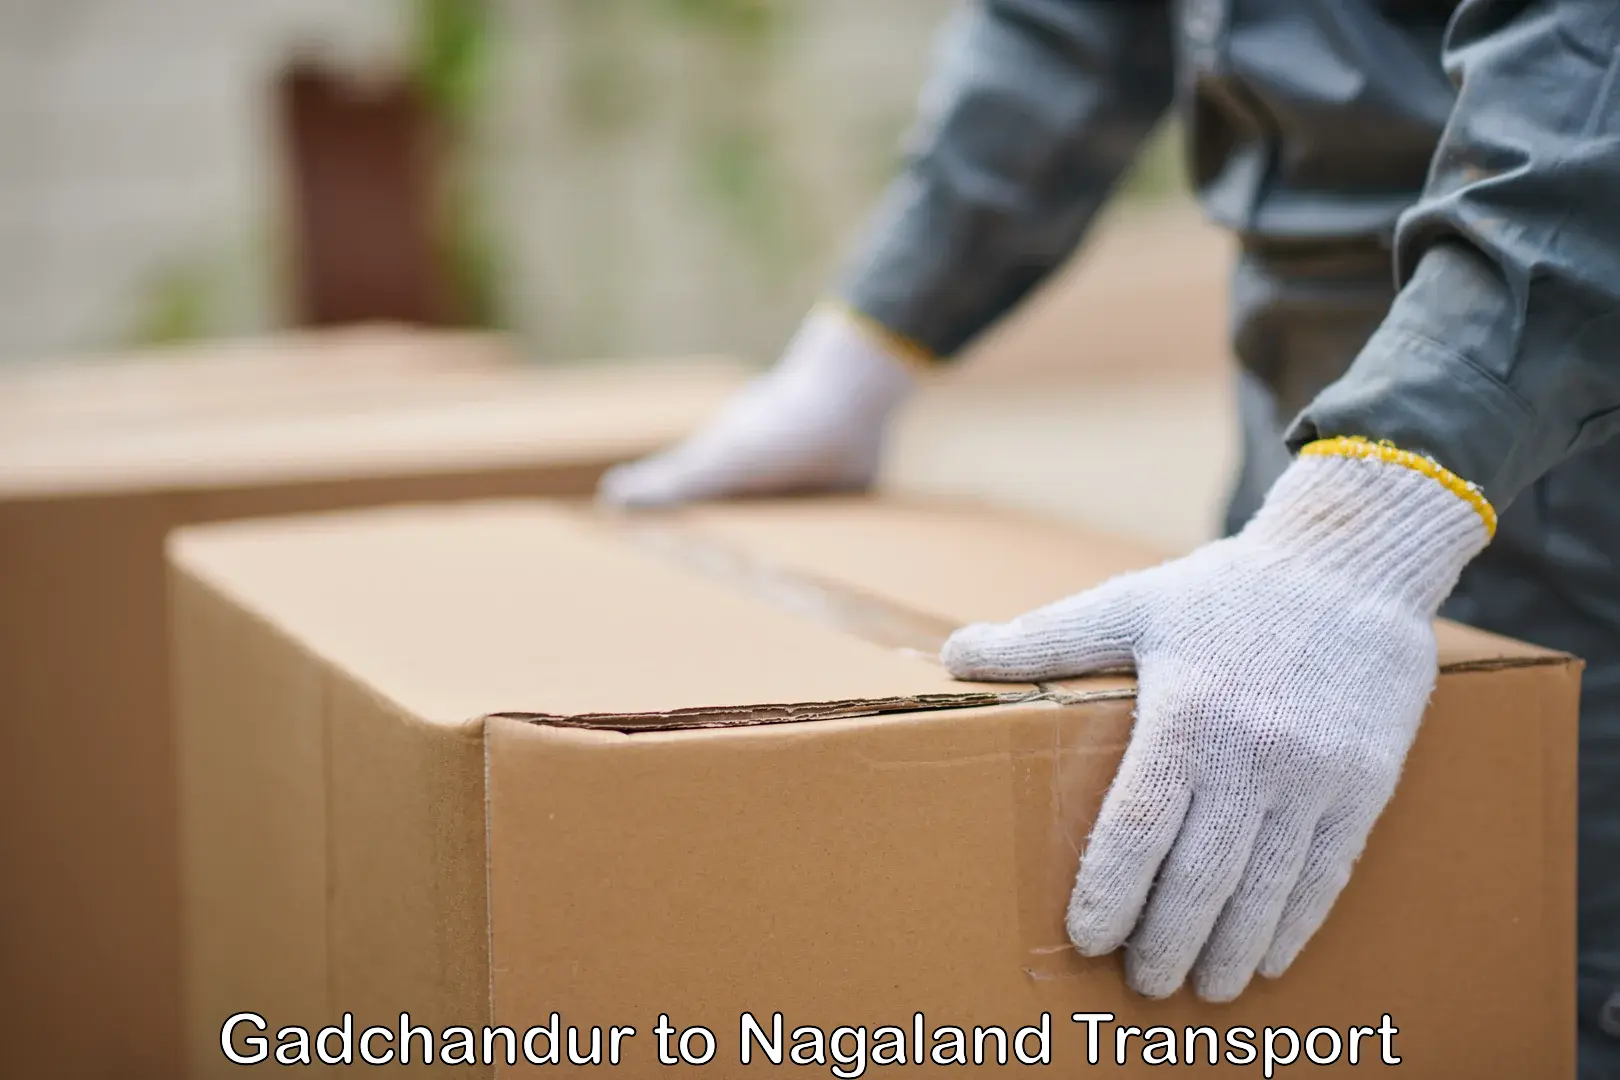 Truck transport companies in India Gadchandur to Nagaland